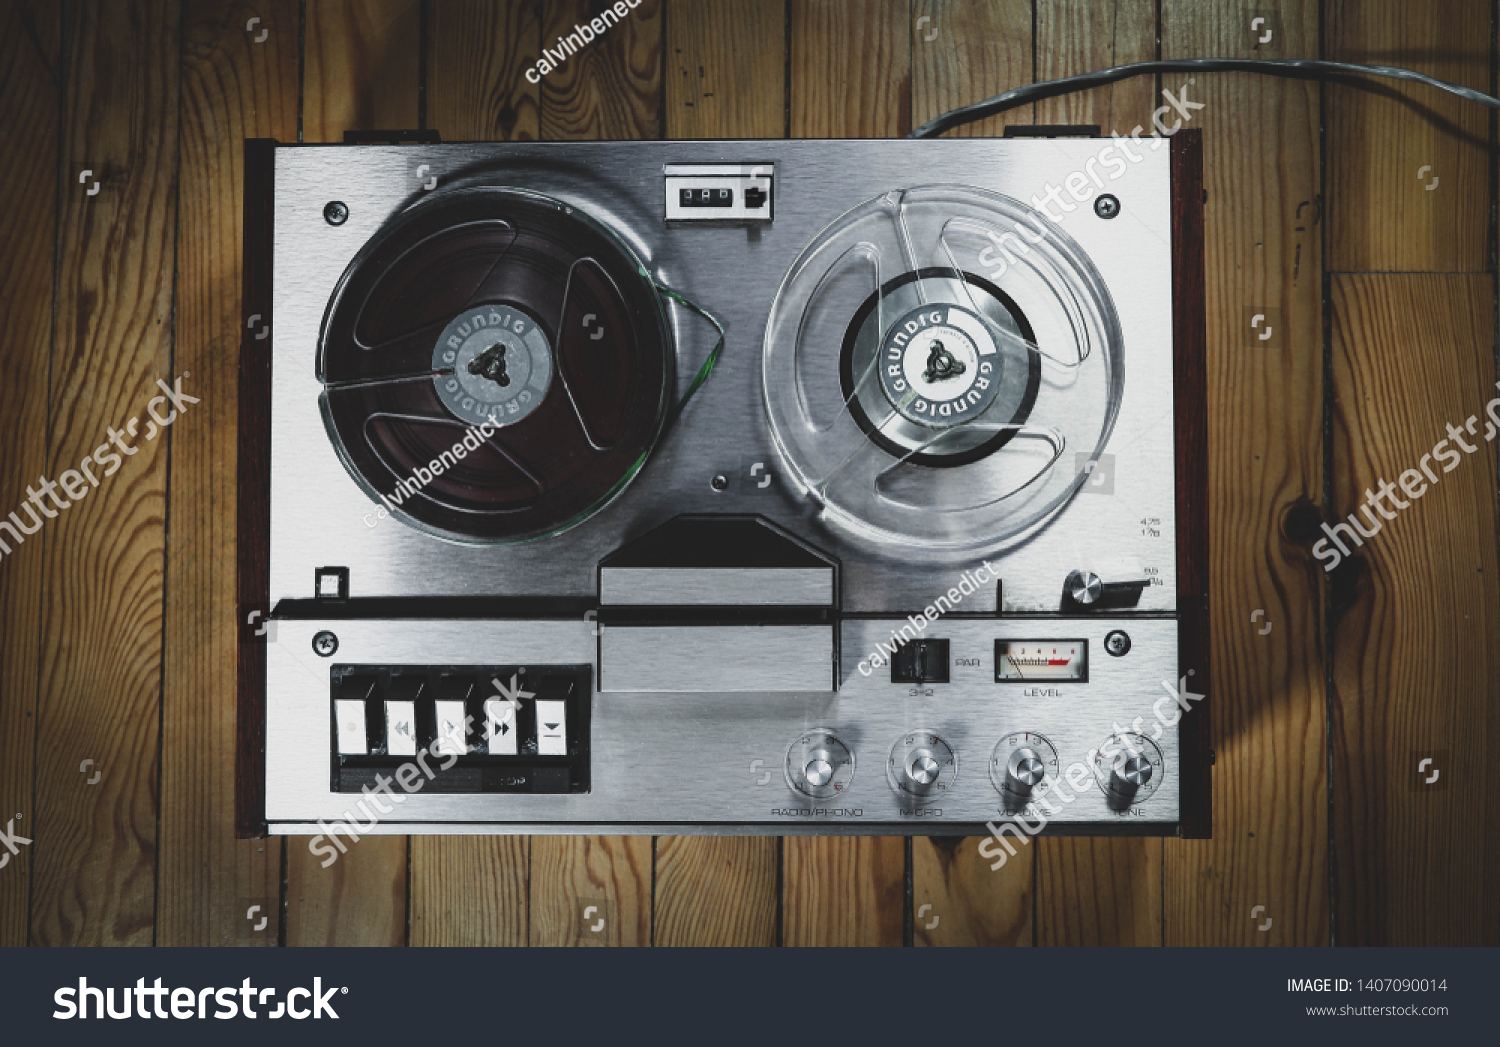 Vintage reel to reel tape recorder on a wooden floor #1407090014